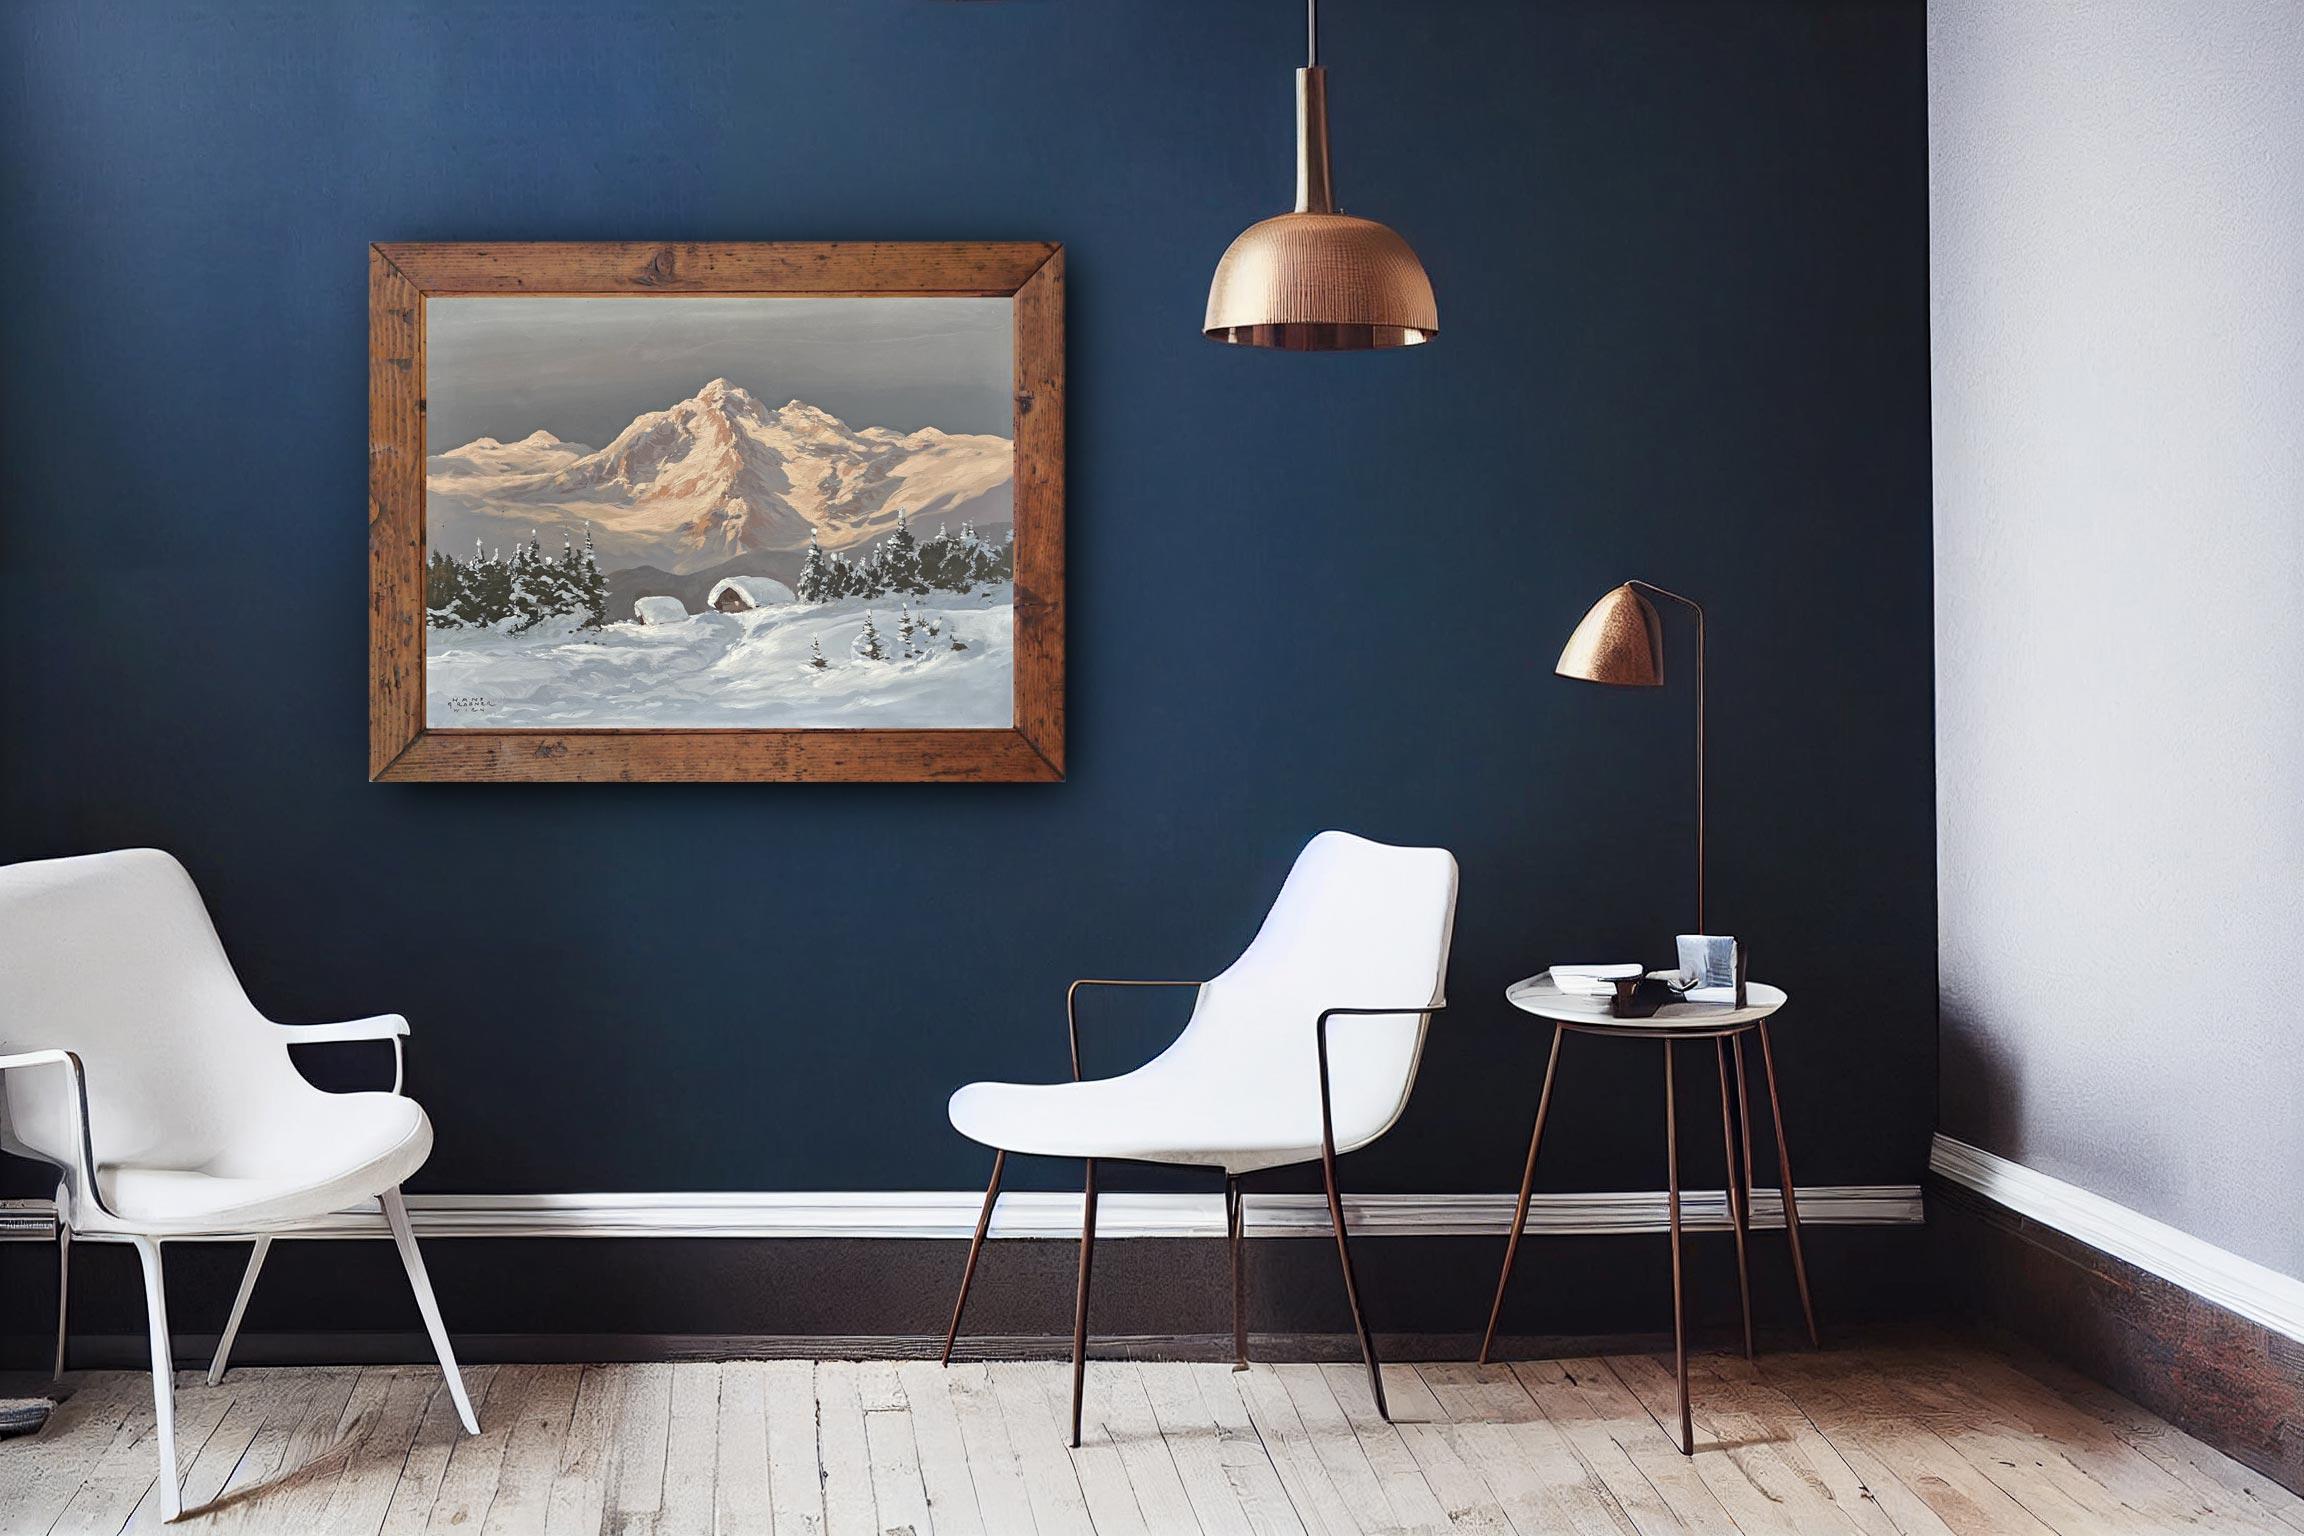 Oiled Hans Grabner, Snowy Landscape at Twilight Oil on Canvas